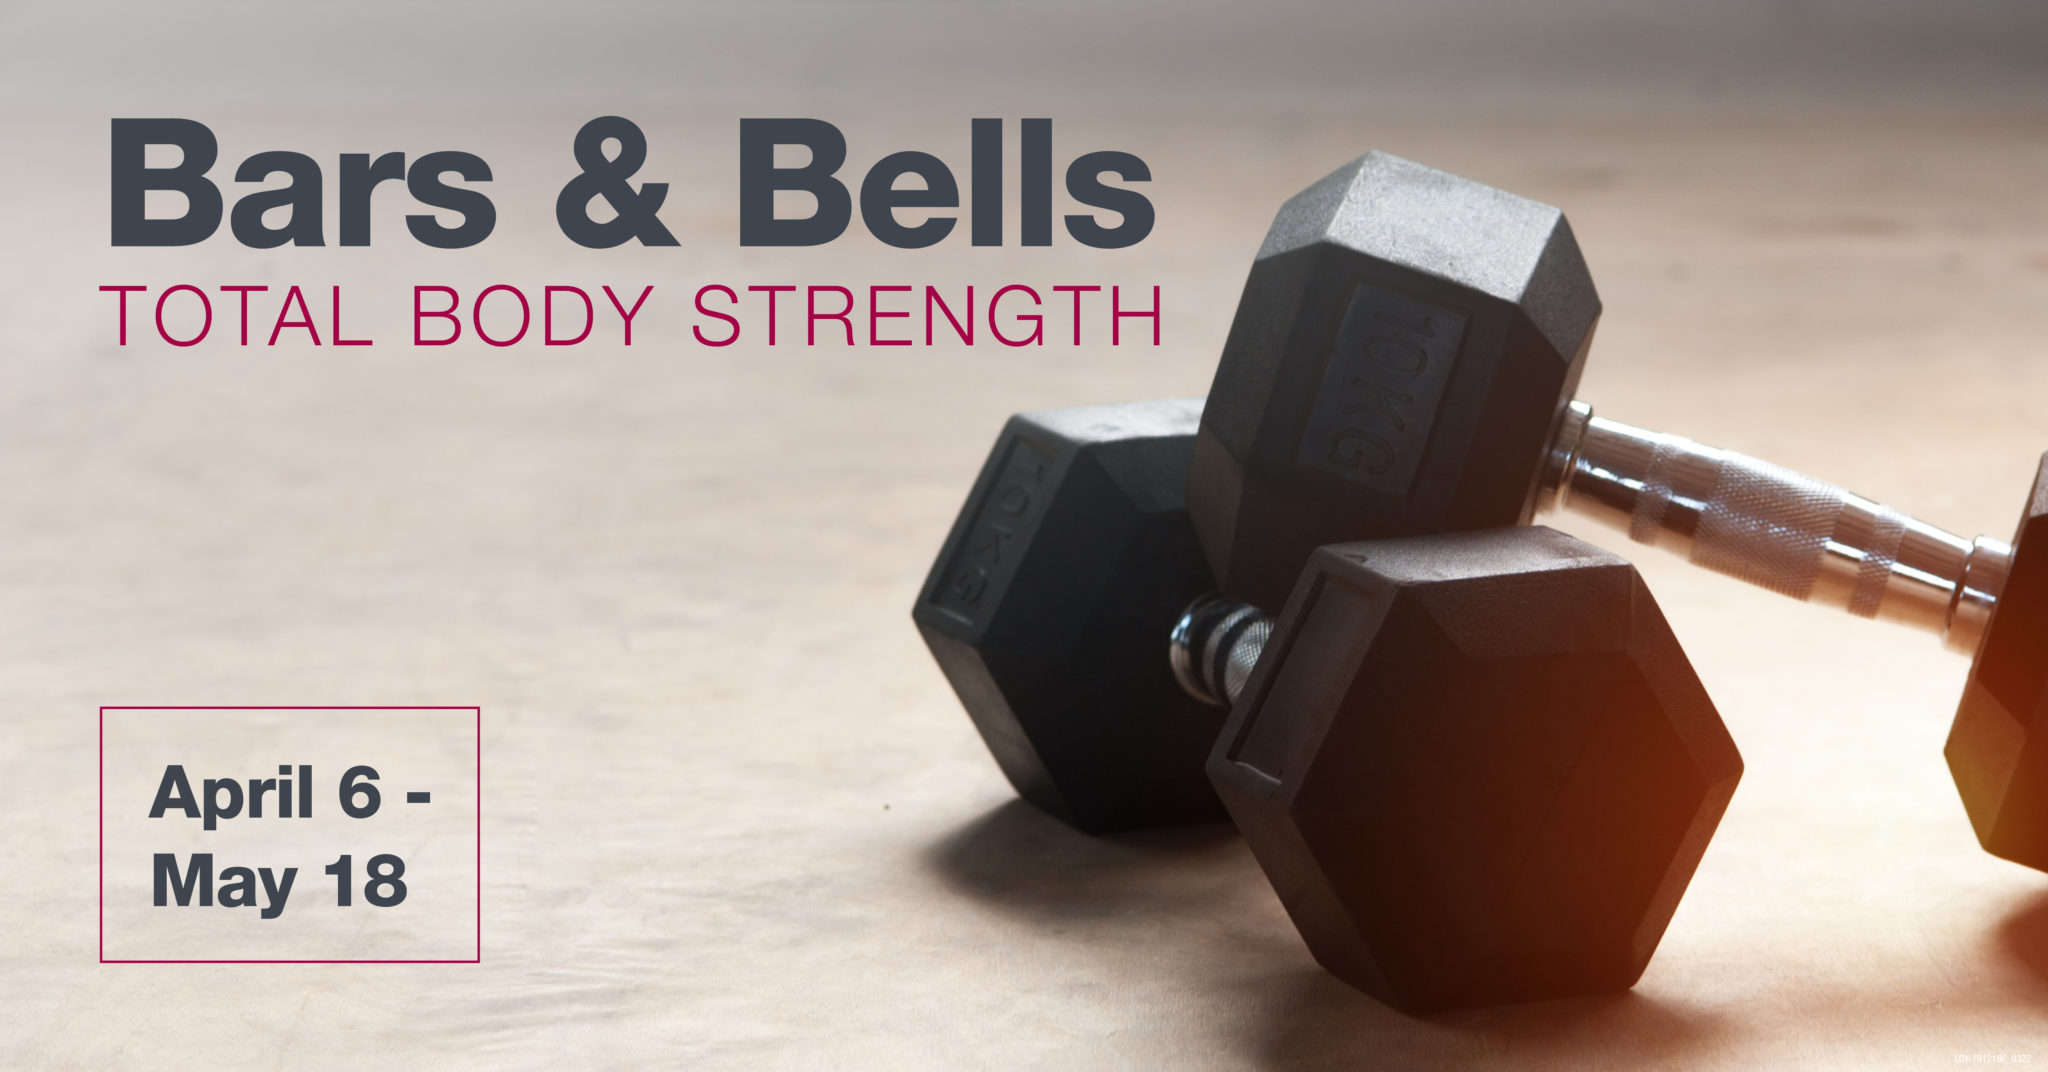 Bars & Bells Total Body Strength